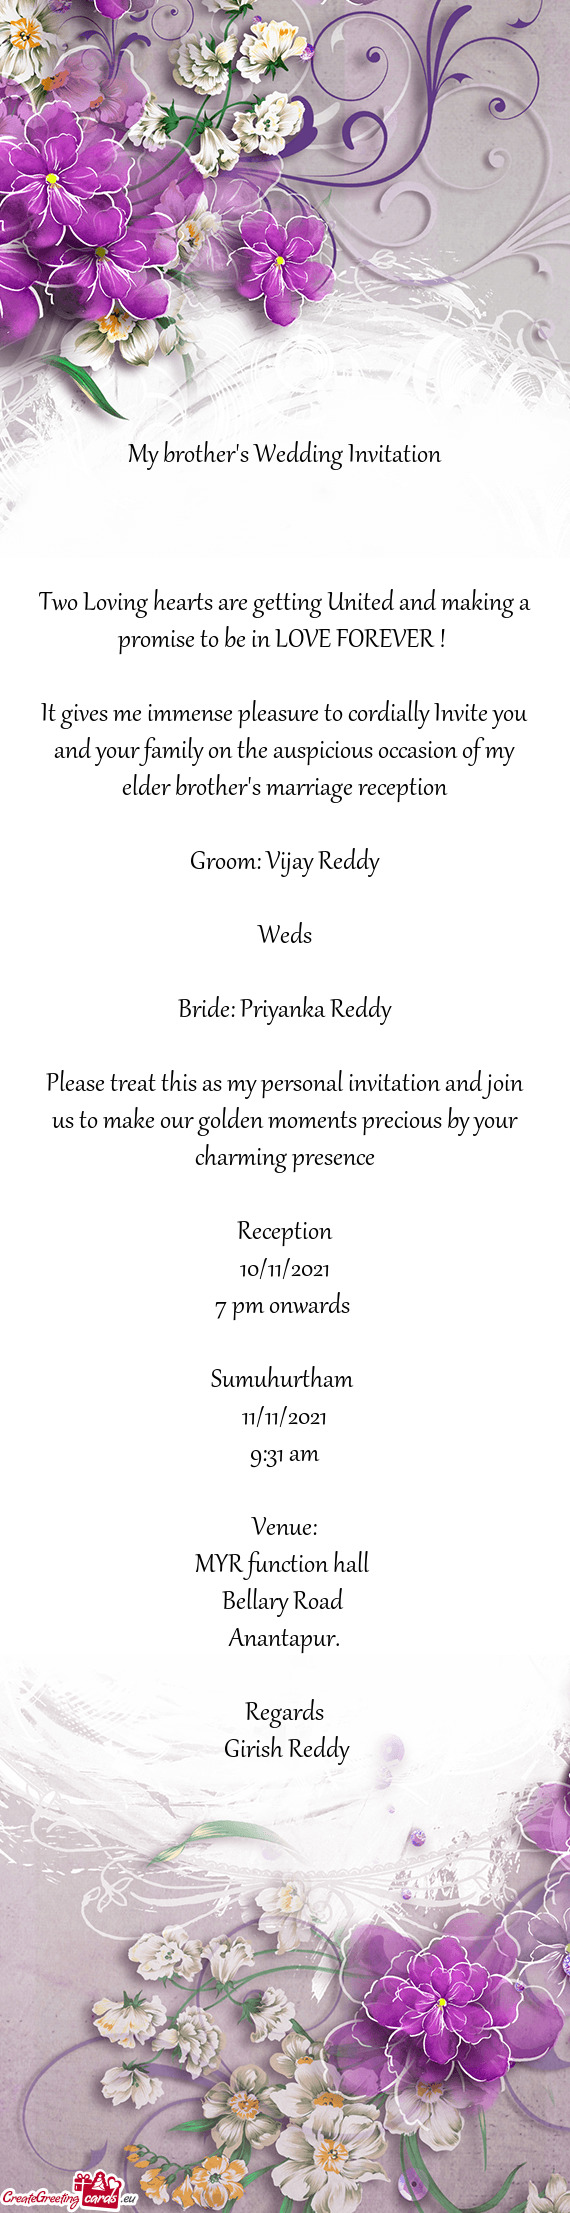 Bride: Priyanka Reddy